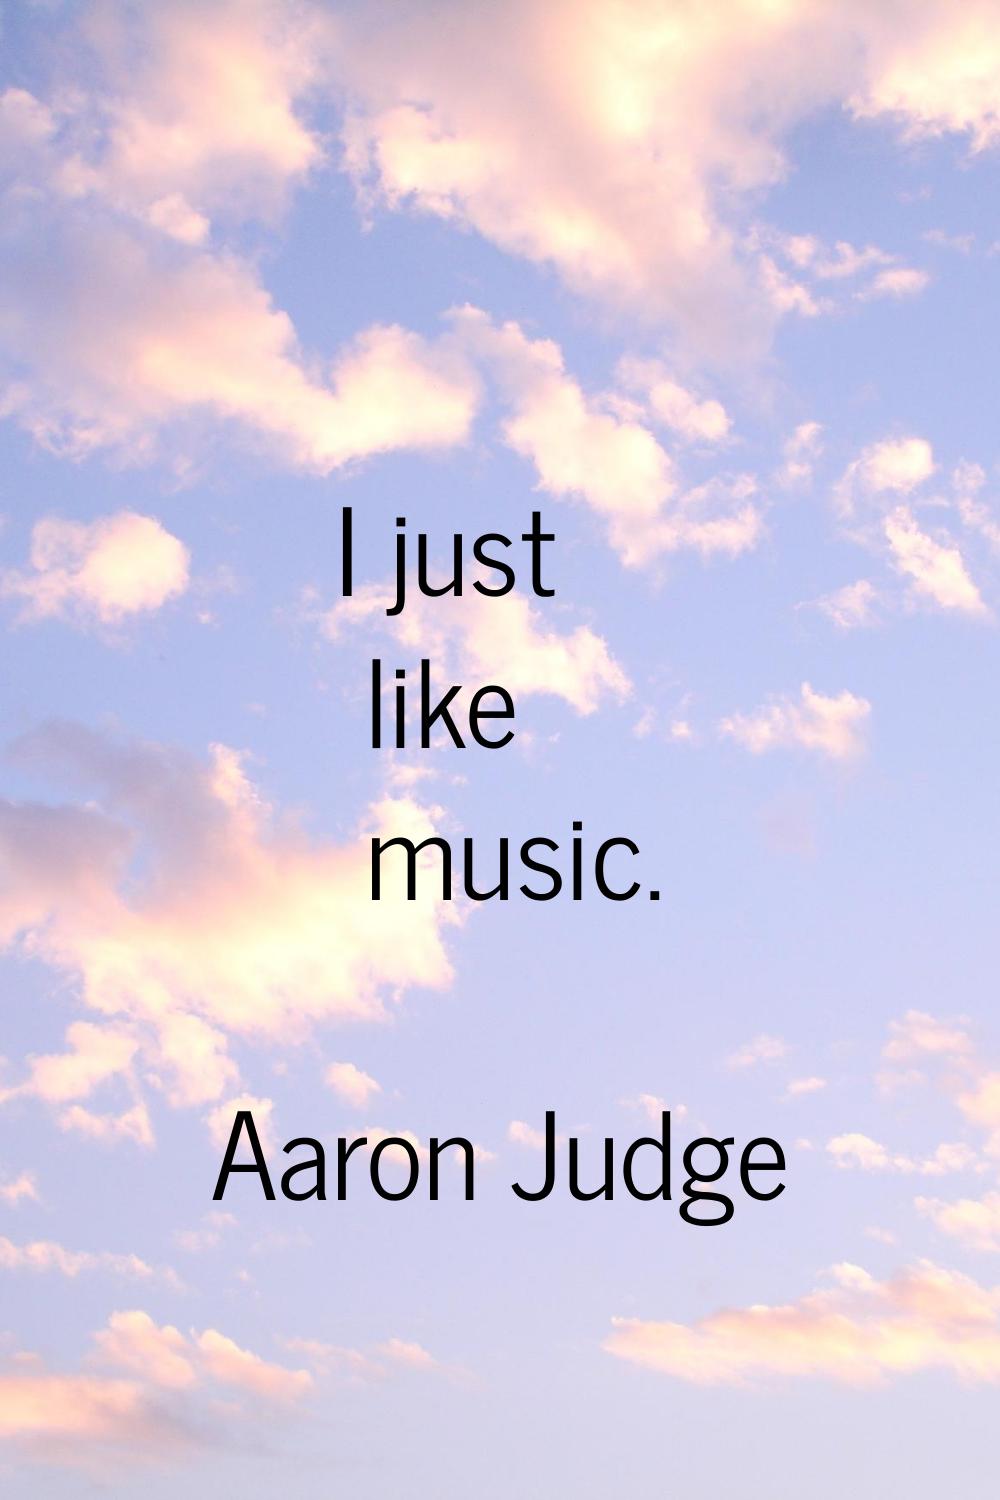 I just like music.